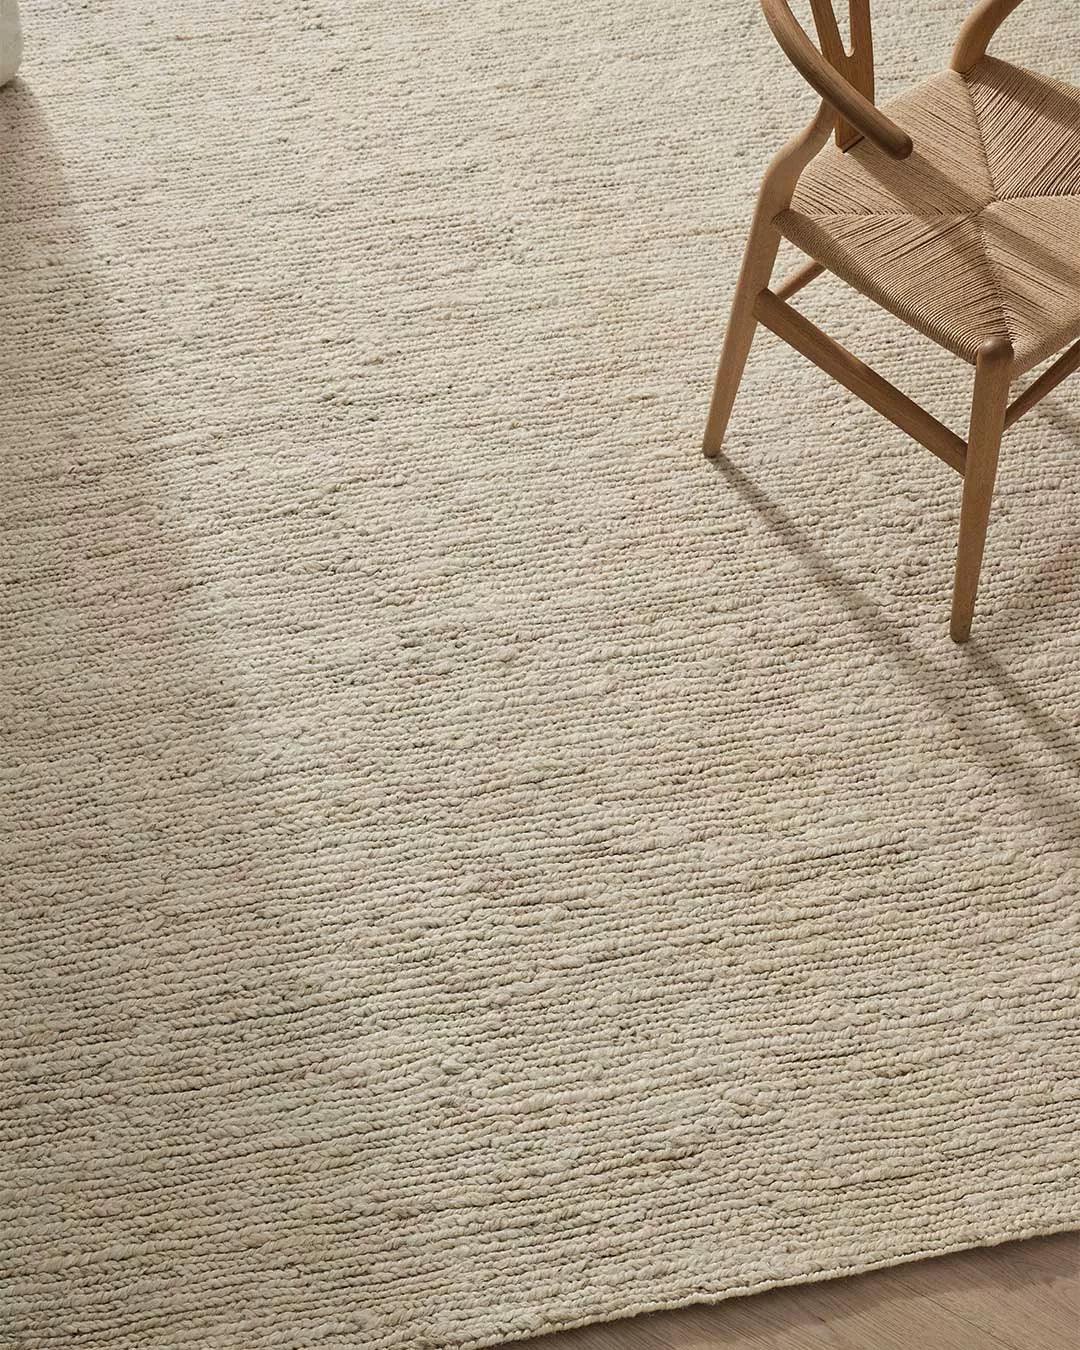 Weave Suffolk Floor Rug - Pearl - 2m x 3m - RugRSK03PEAR 5